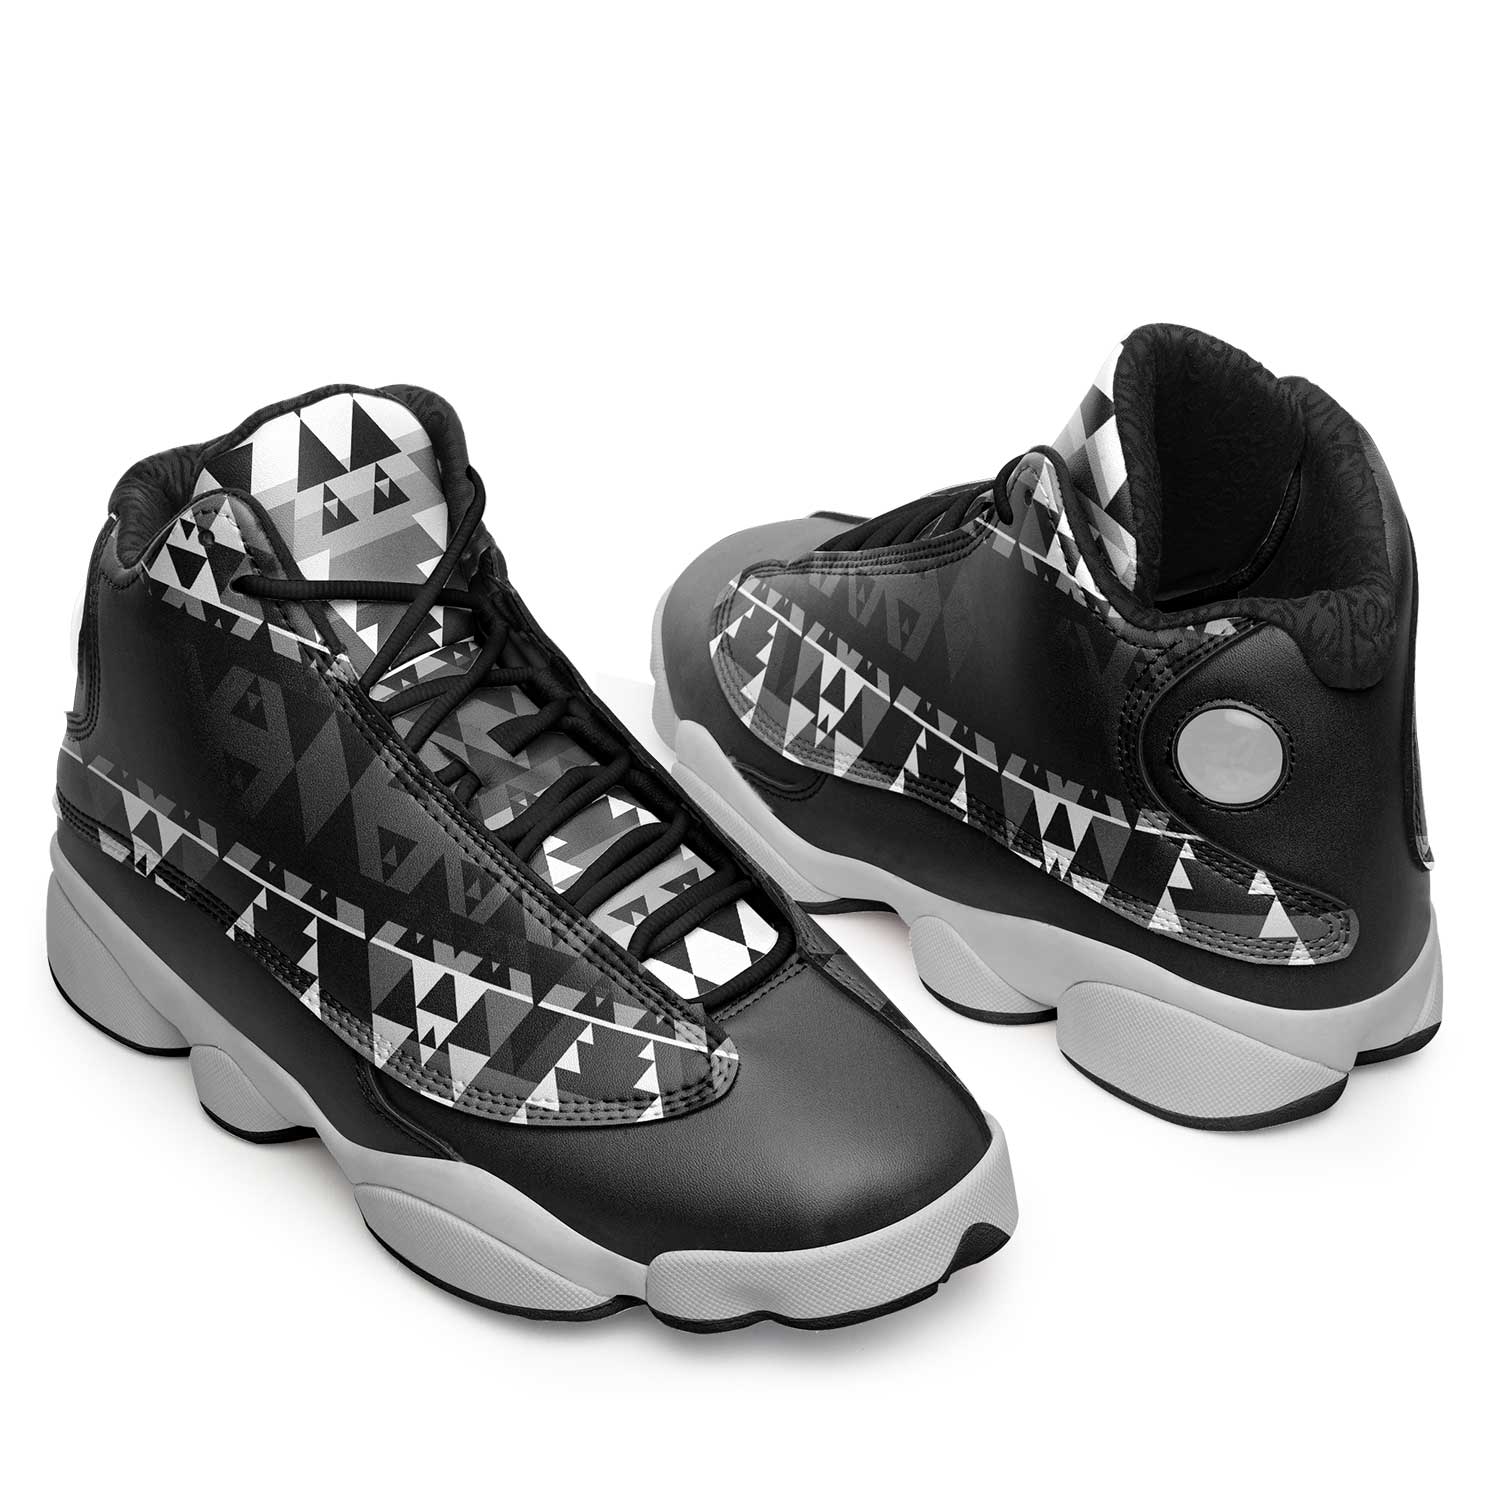 Writing on Stone Black and White Isstsokini Athletic Shoes Herman 